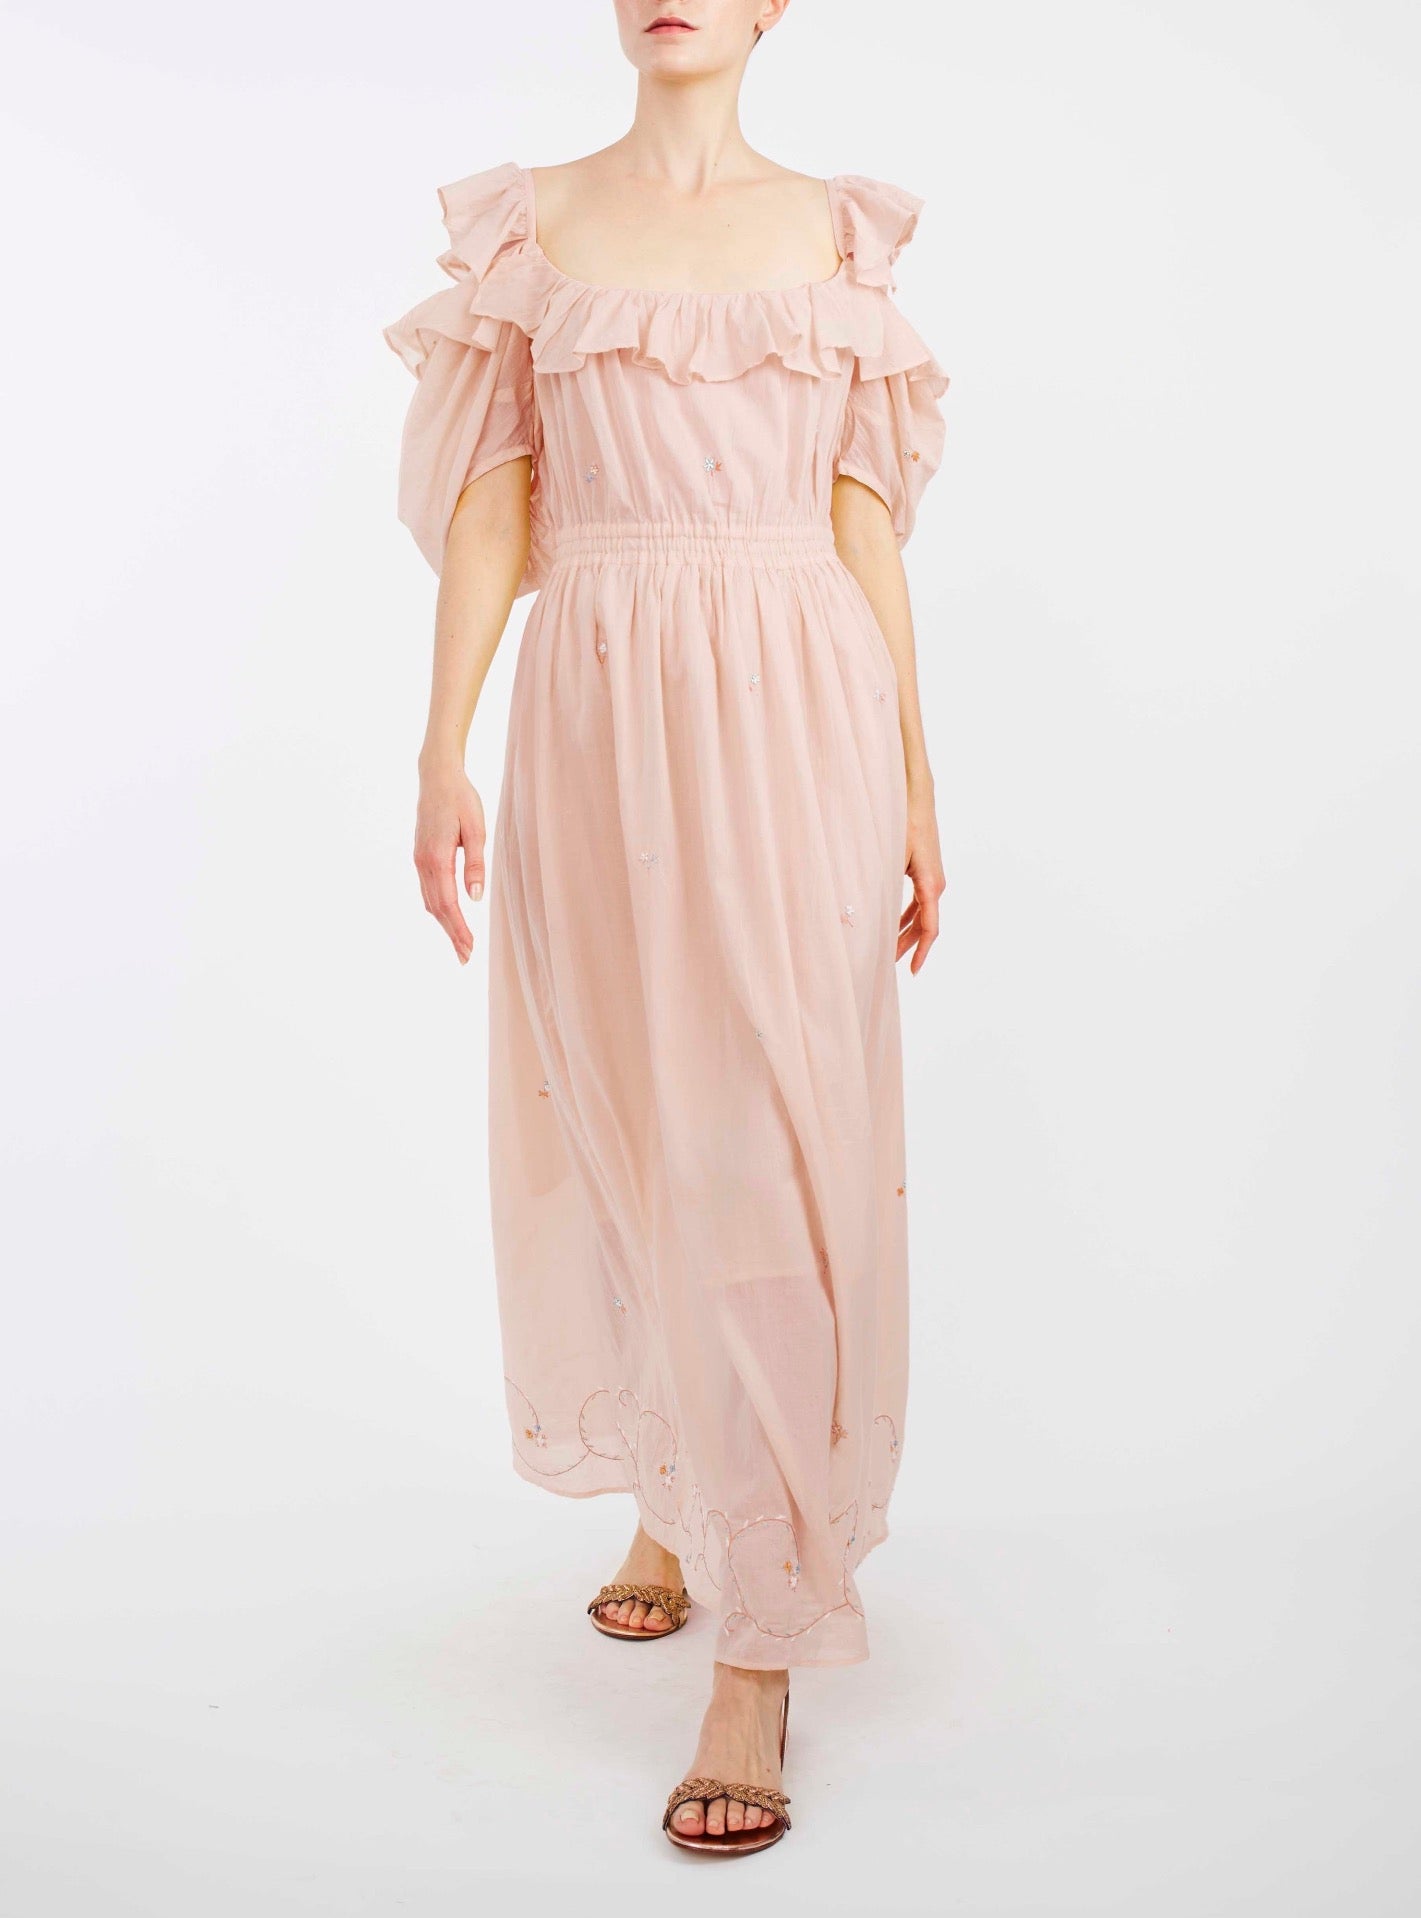 Venus Boudoir Carmelite Pink Dress by Thierry Colson